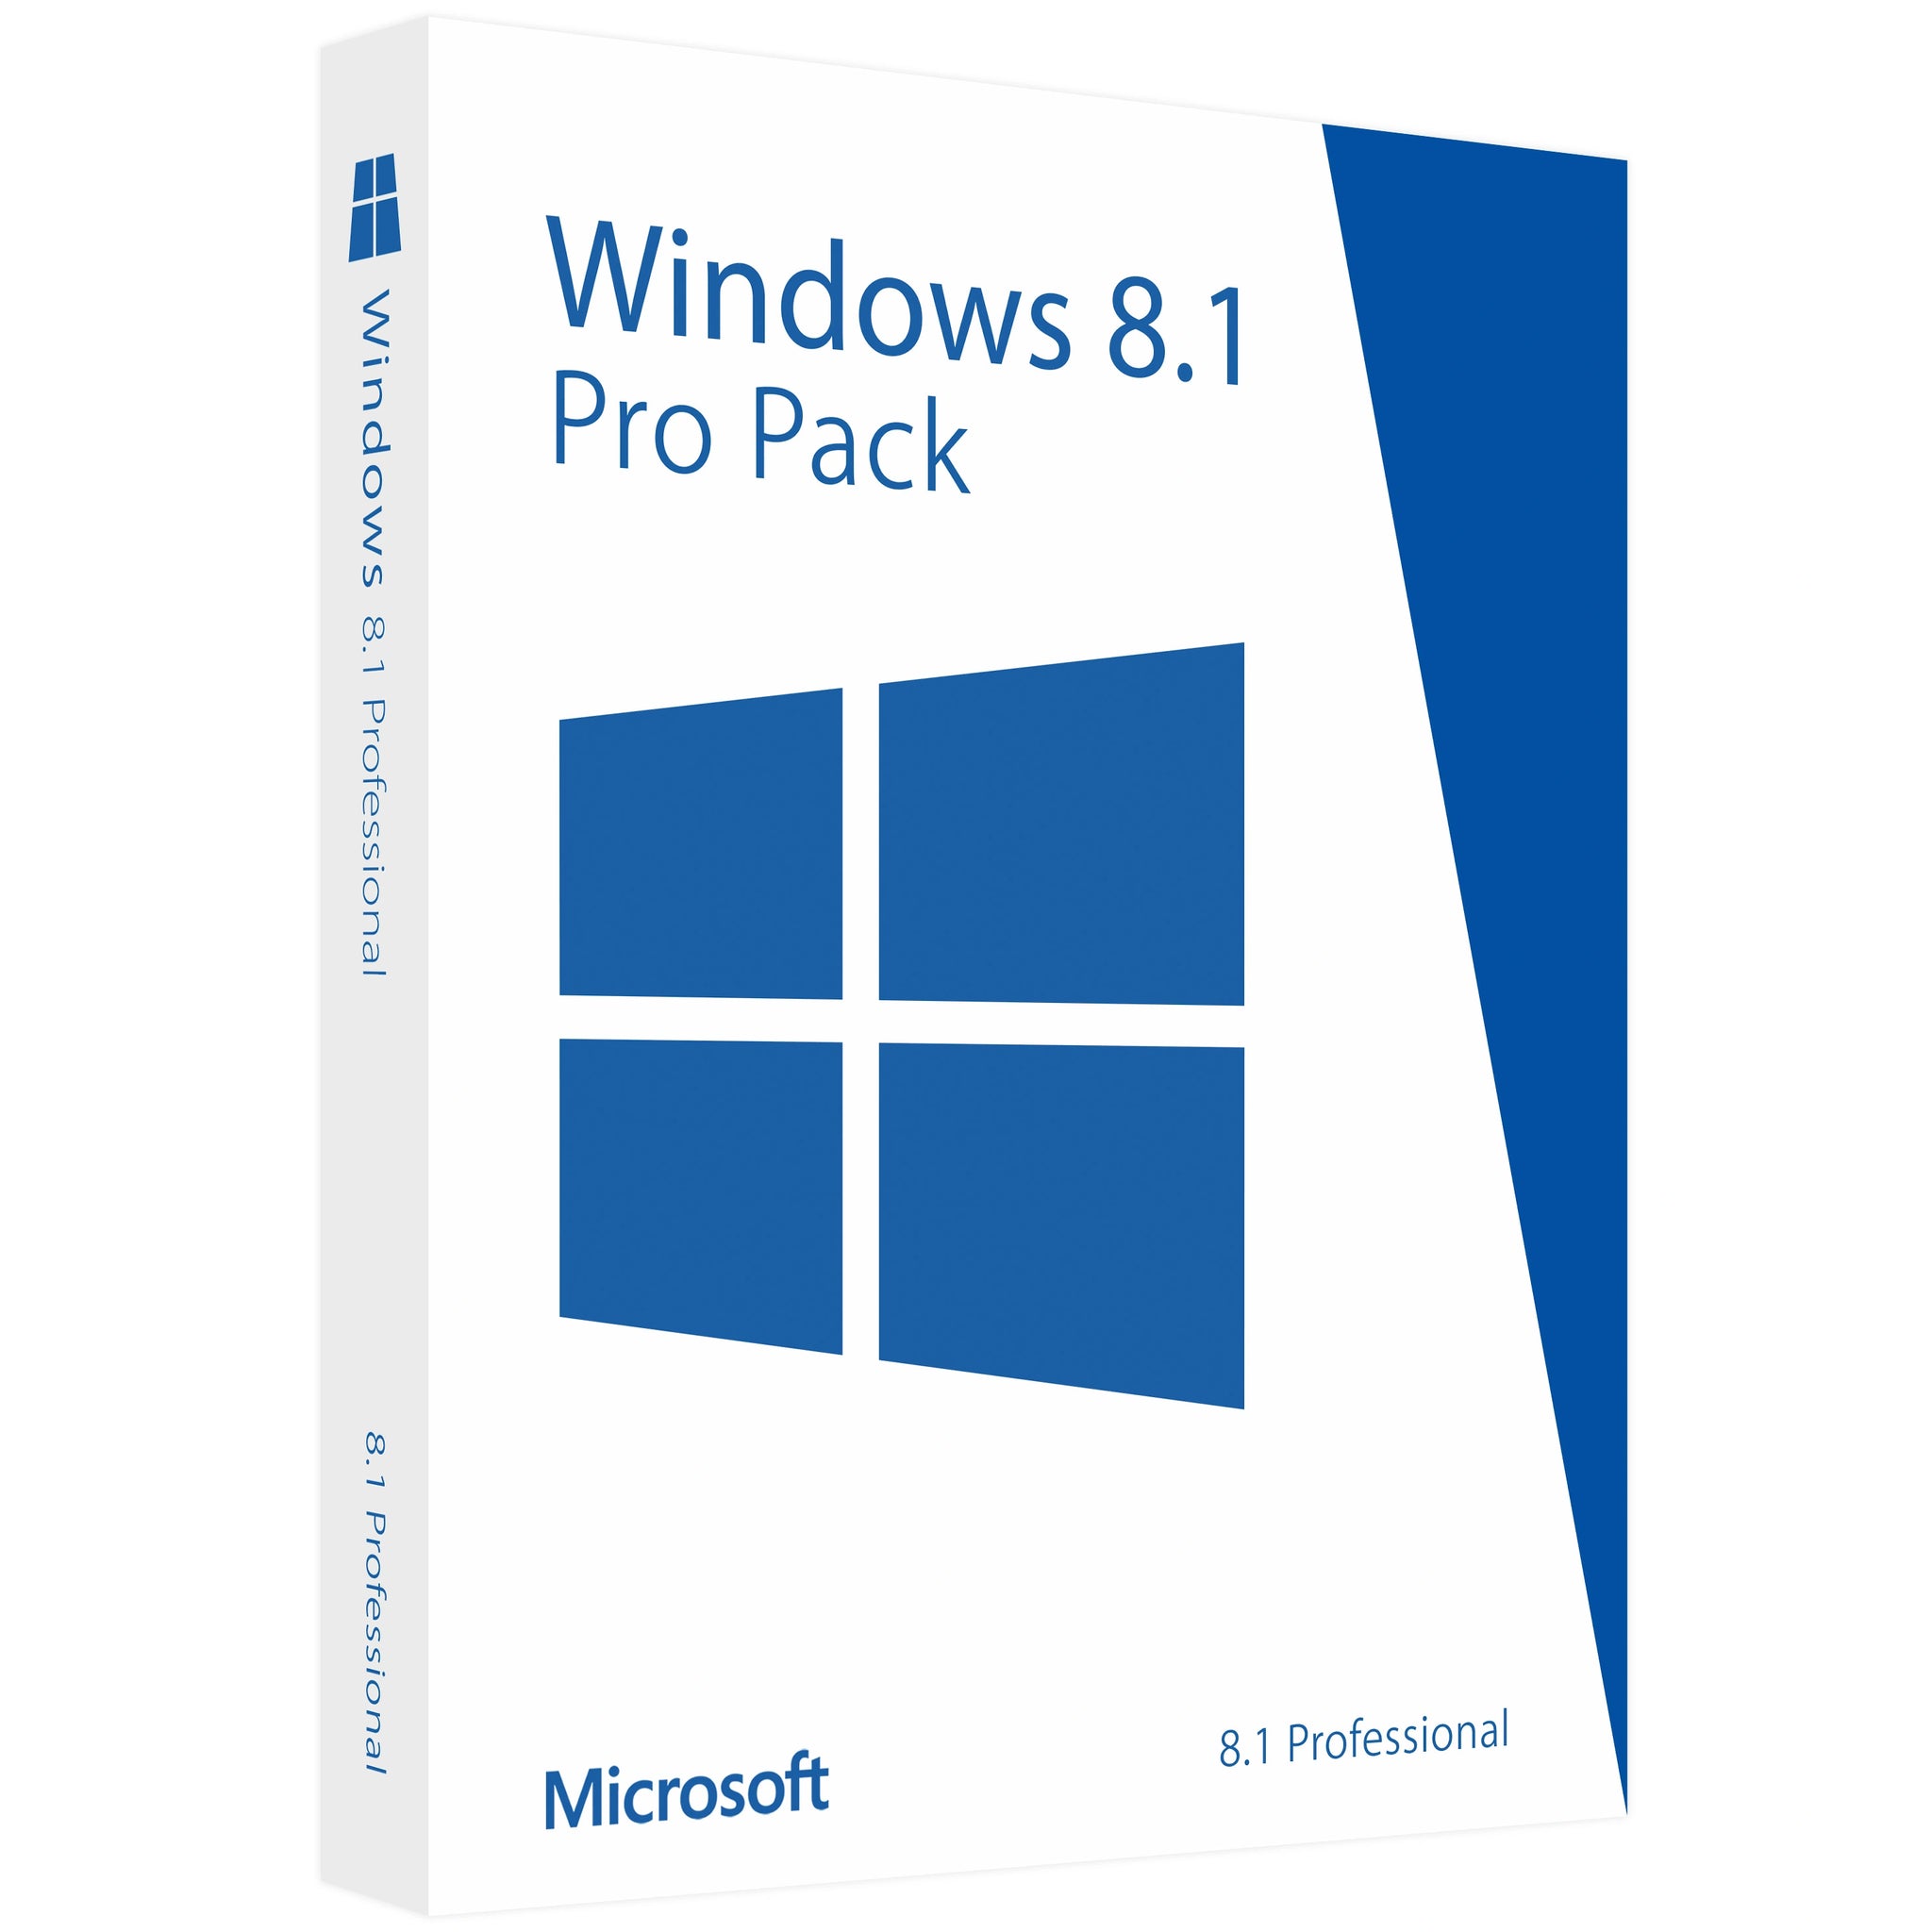 Microsoft Windows 8.1 Professional - Lifetime License Key for 1 PC